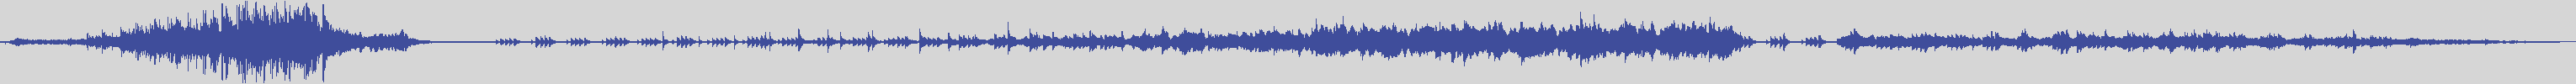 noclouds_chillout [NOC010] Allevi - Himalaya's Wind [Original Mix] audio wave form